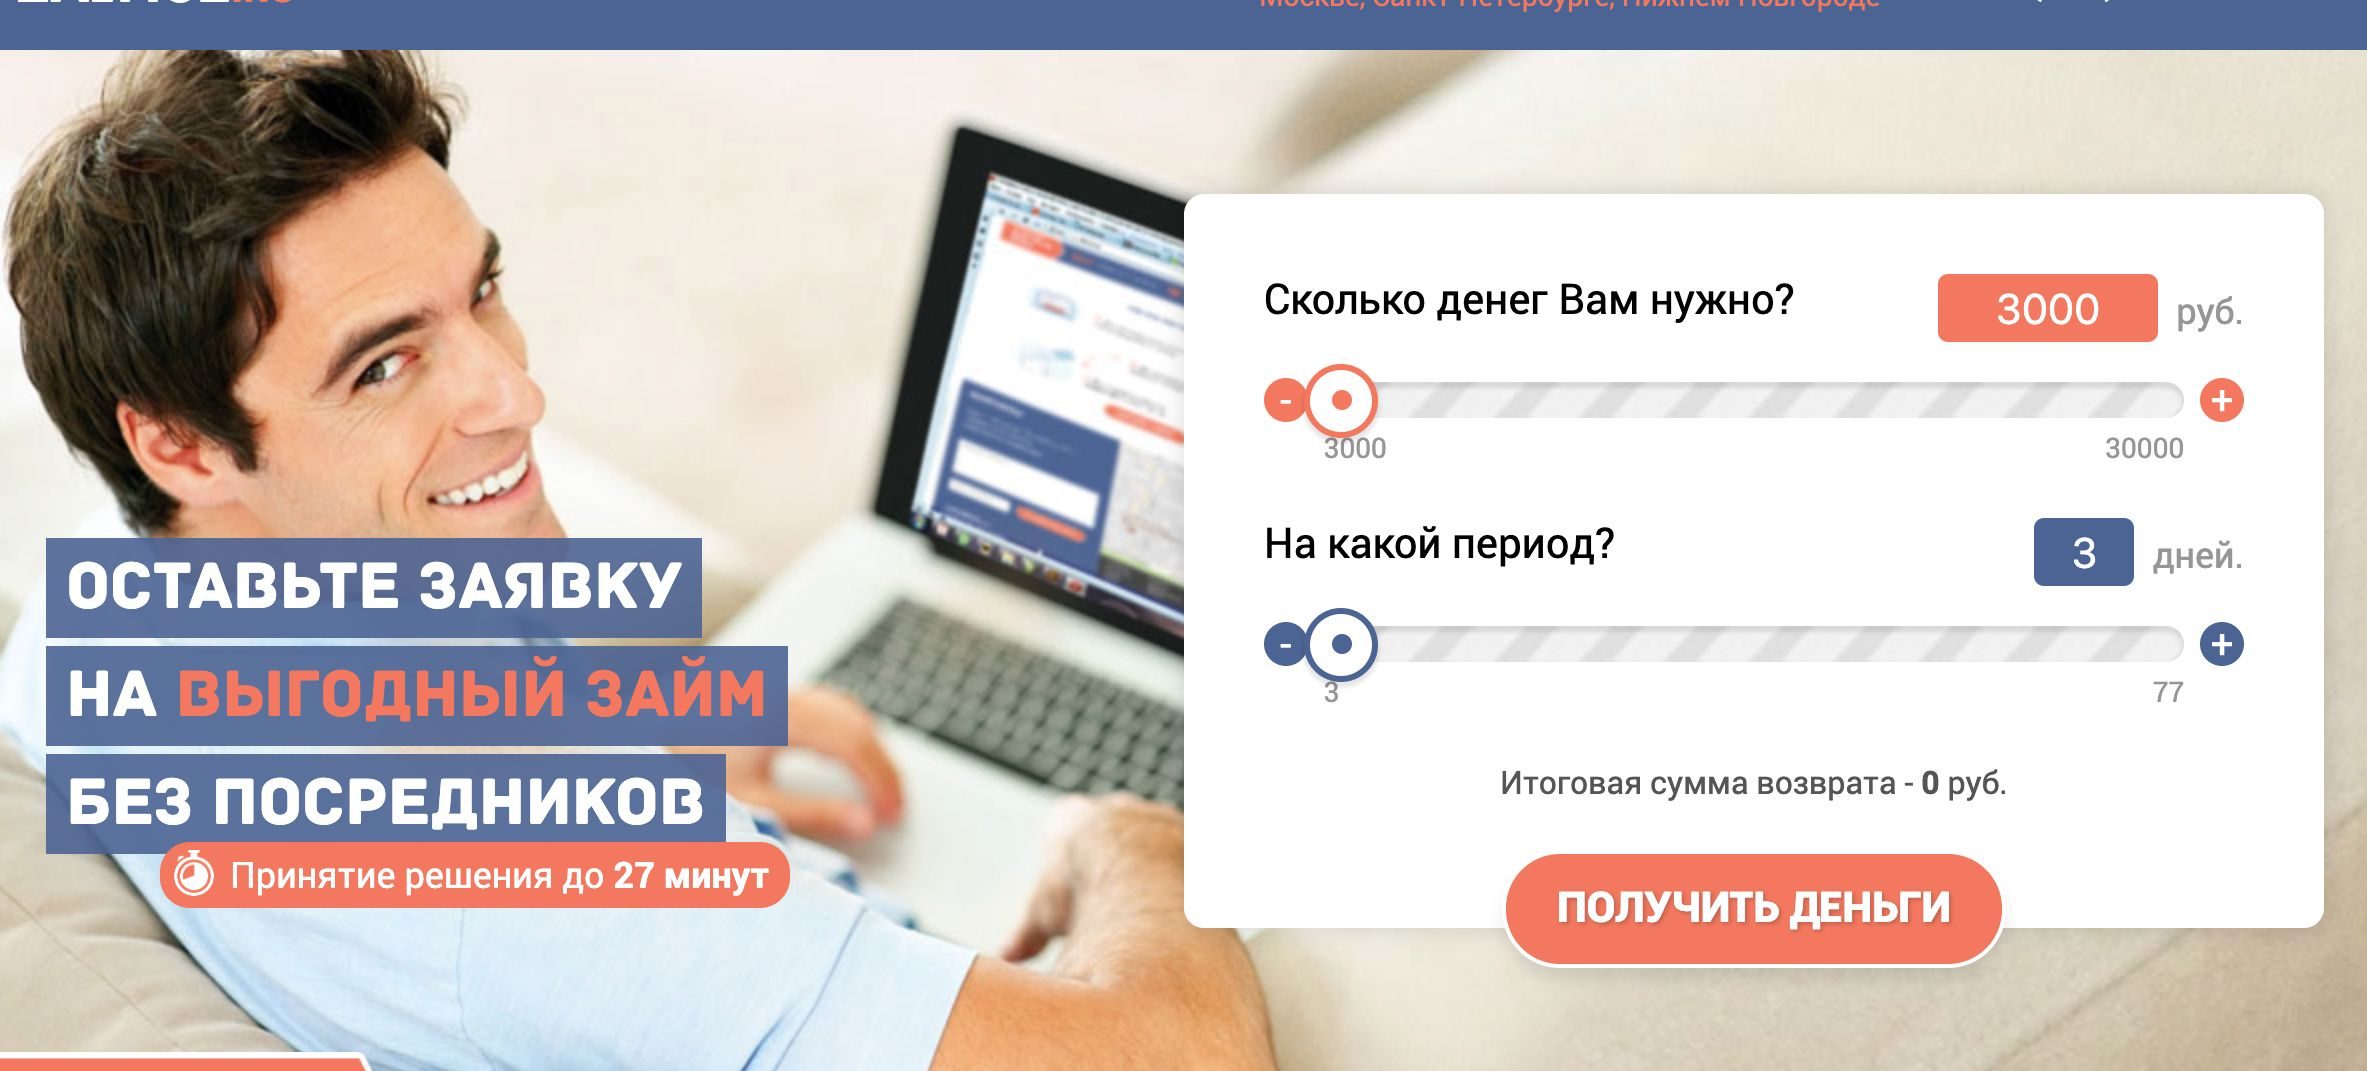 Займы россии онлайн заявка